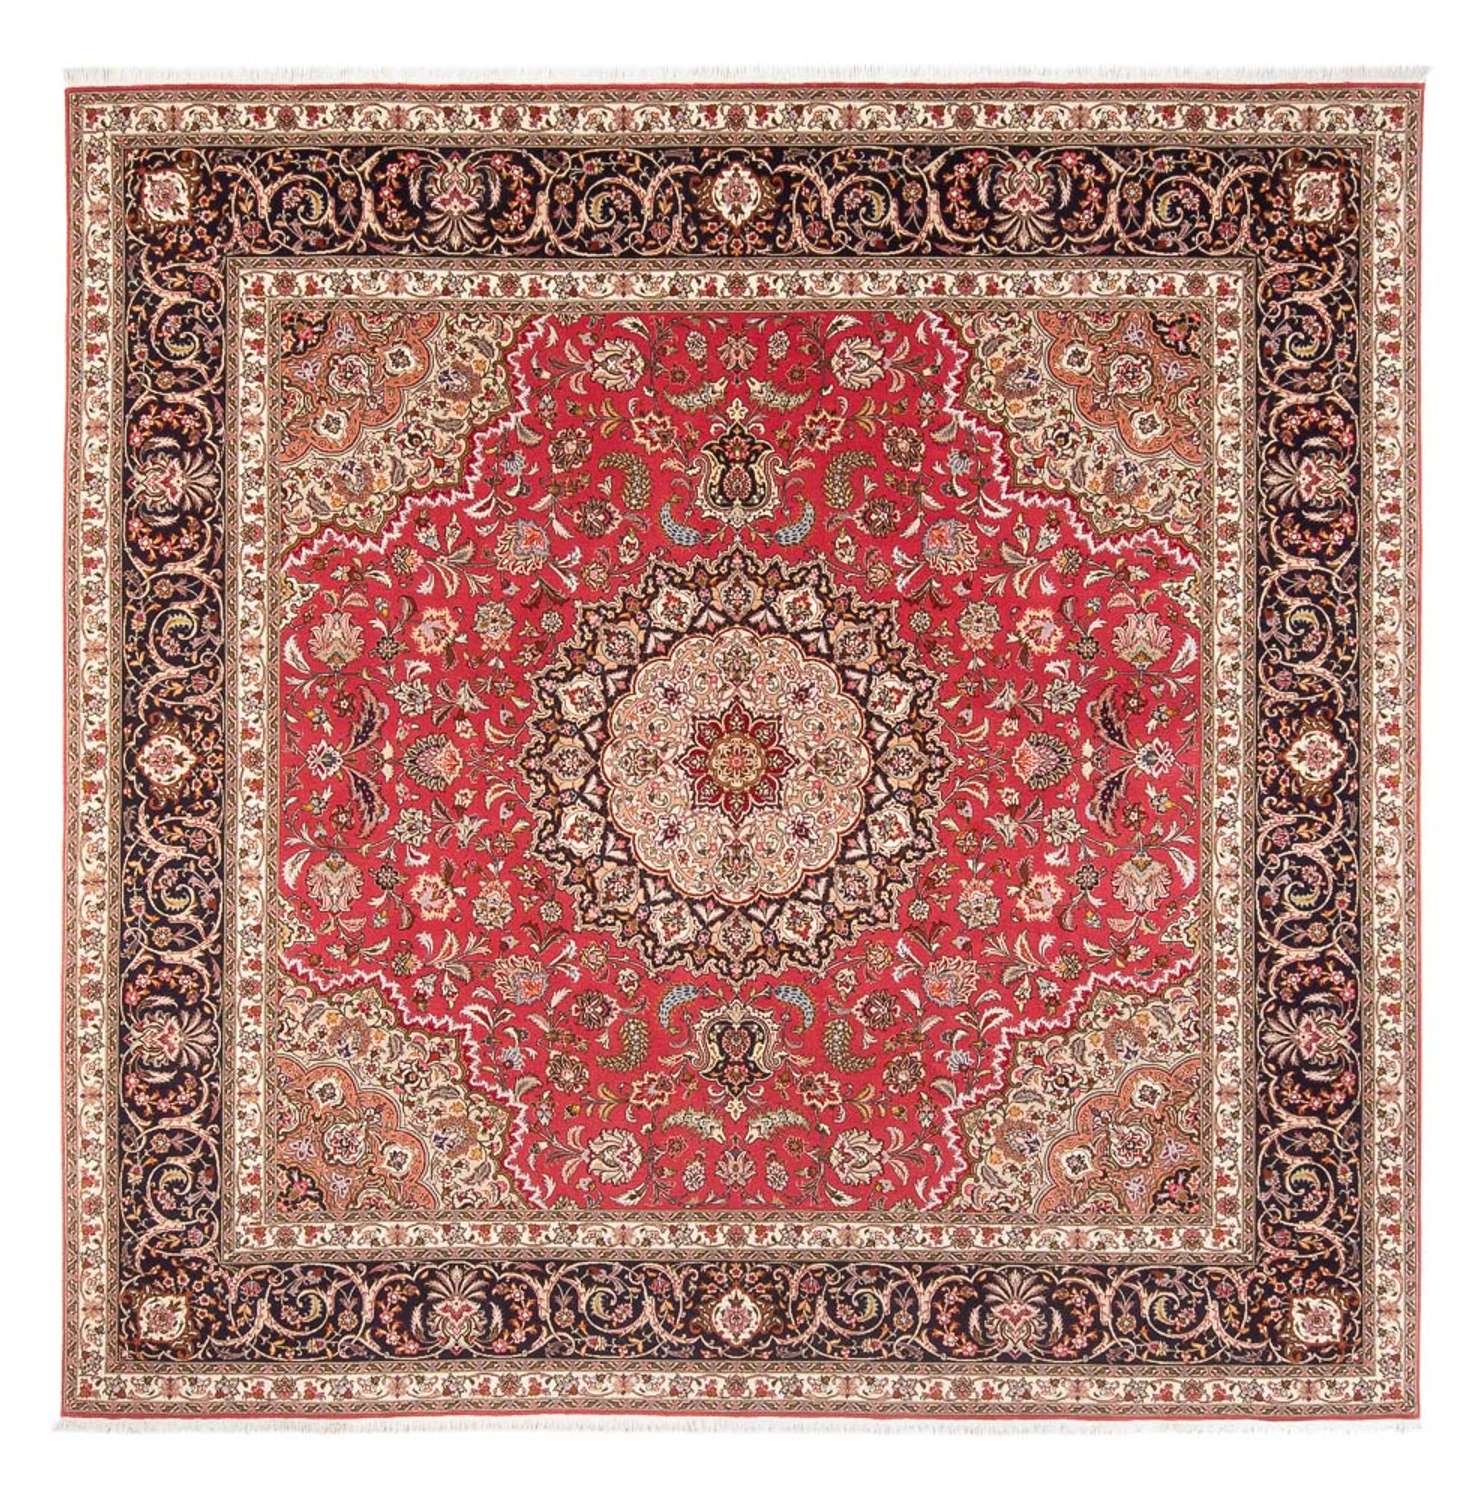 Perser Rug - Tabriz - Royal square  - 252 x 252 cm - red